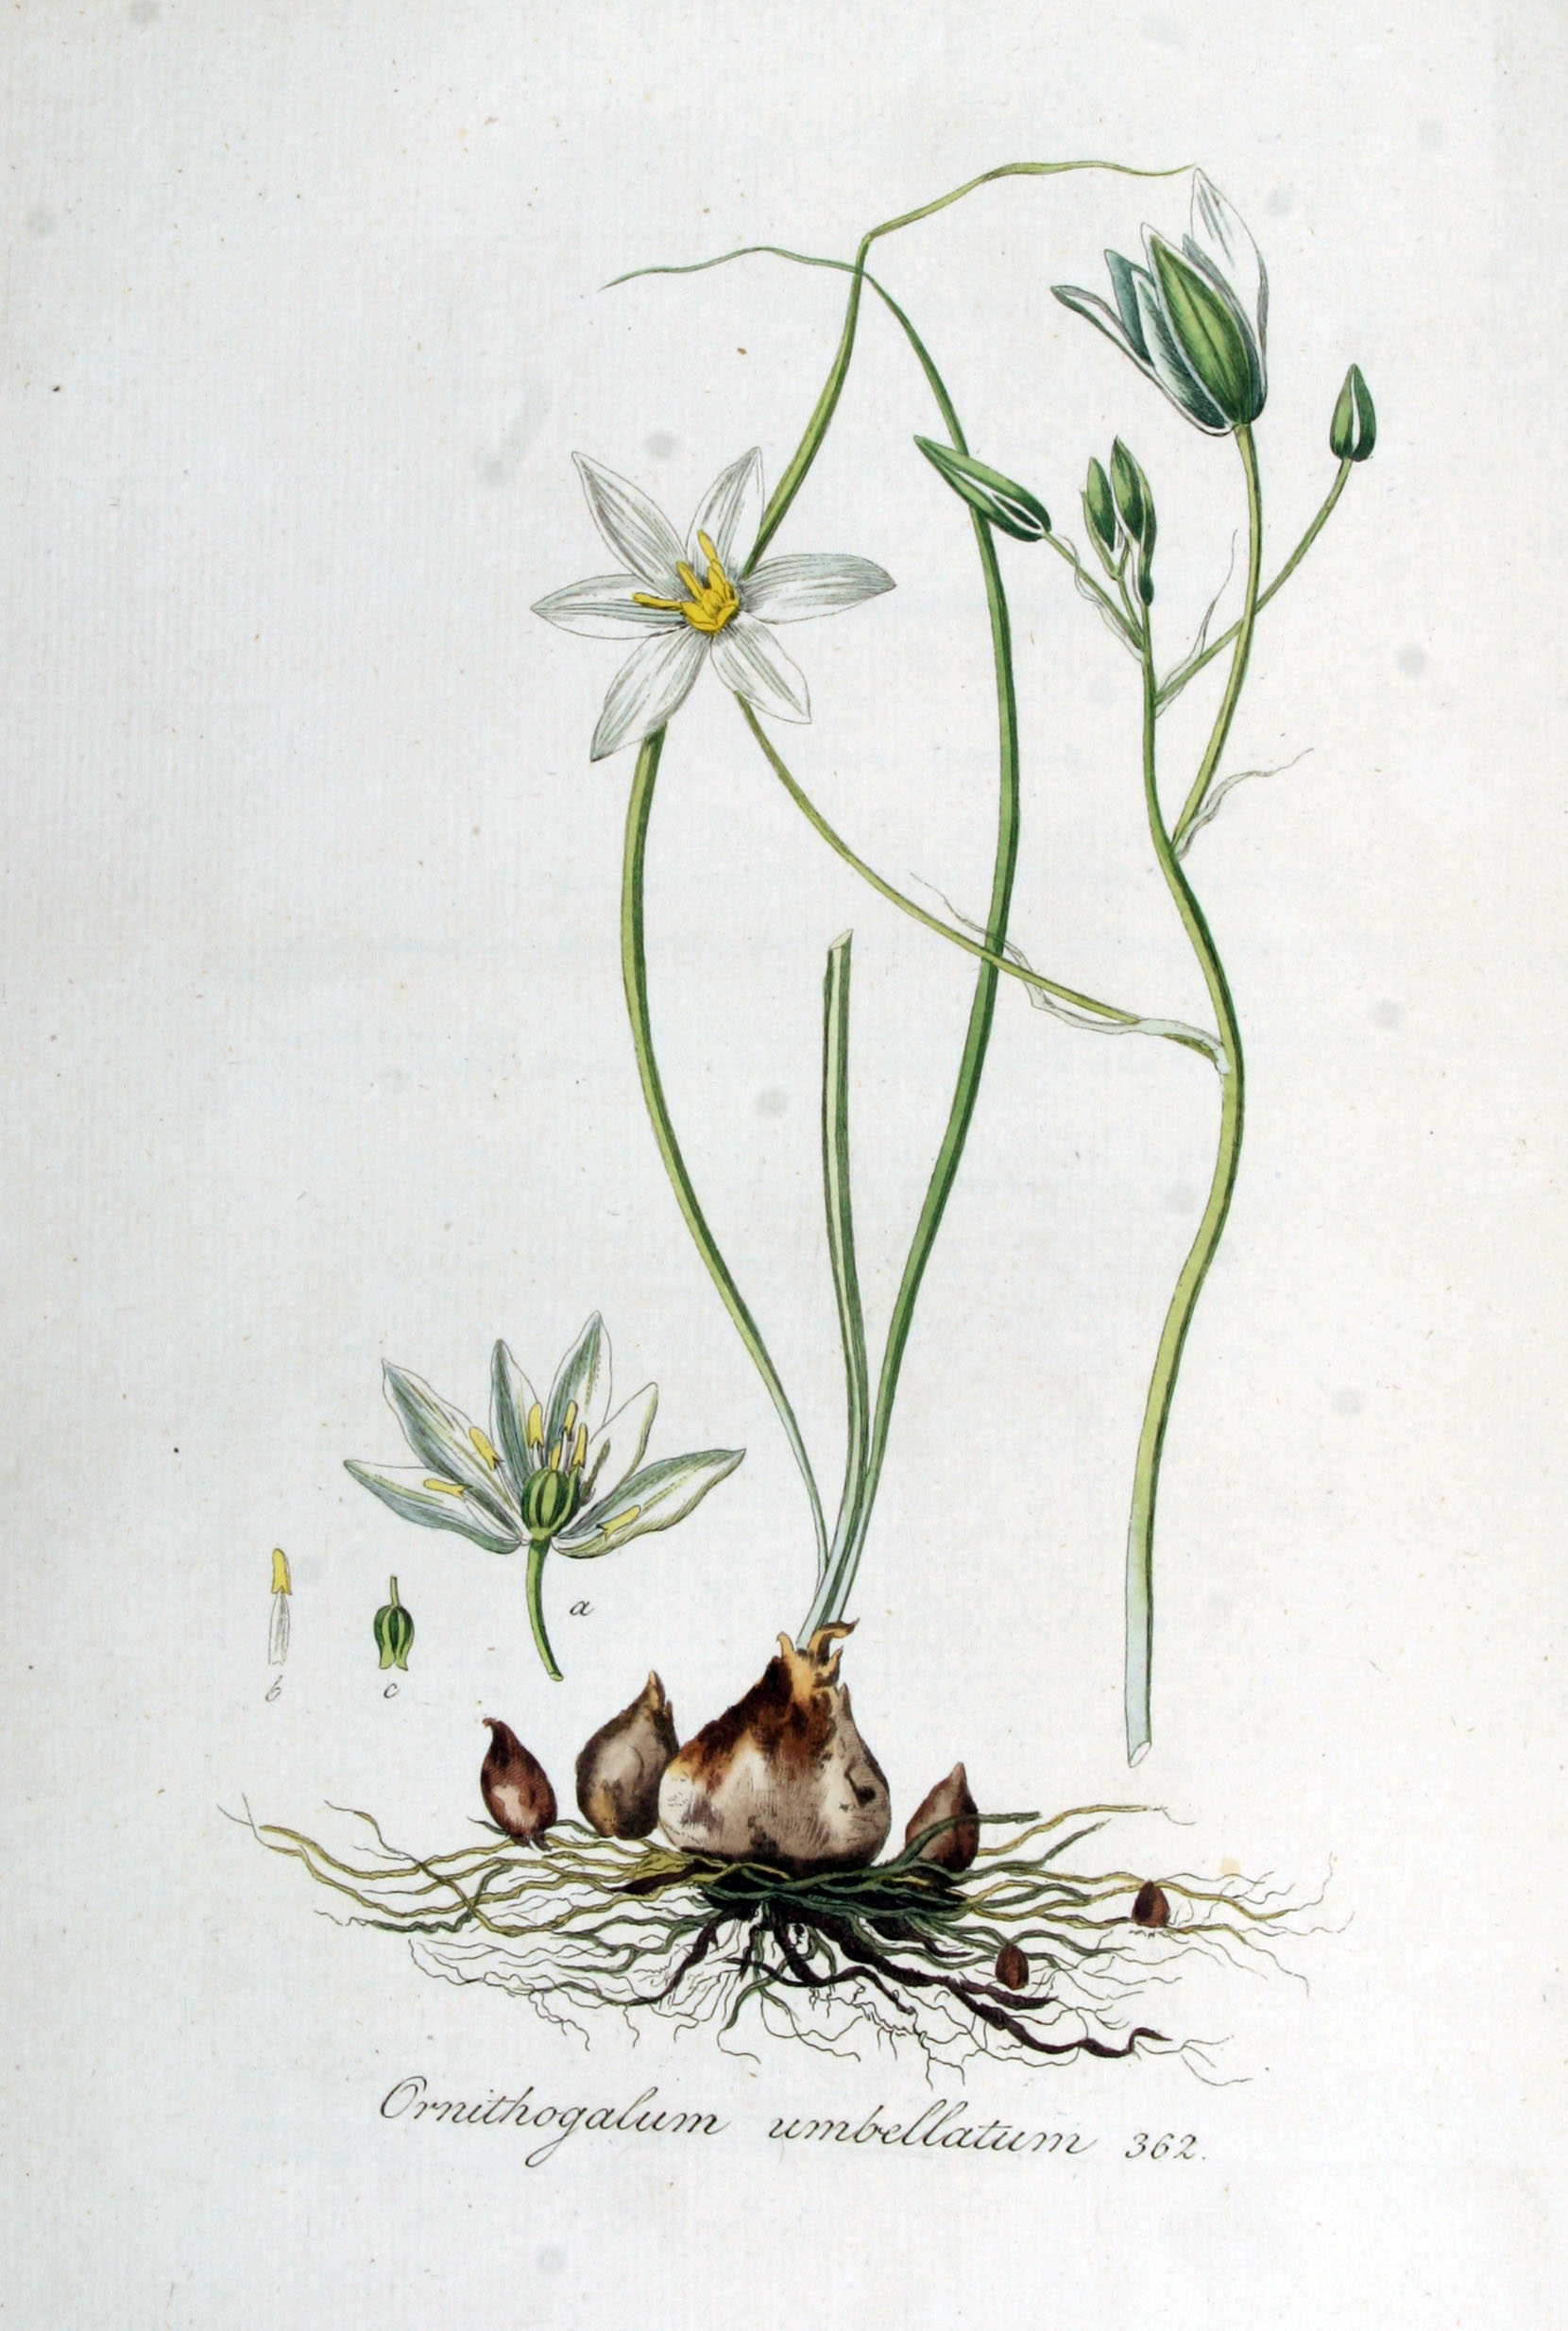 1828 Ornithogalum umbellatum  illustration by Christiaan Sepp.